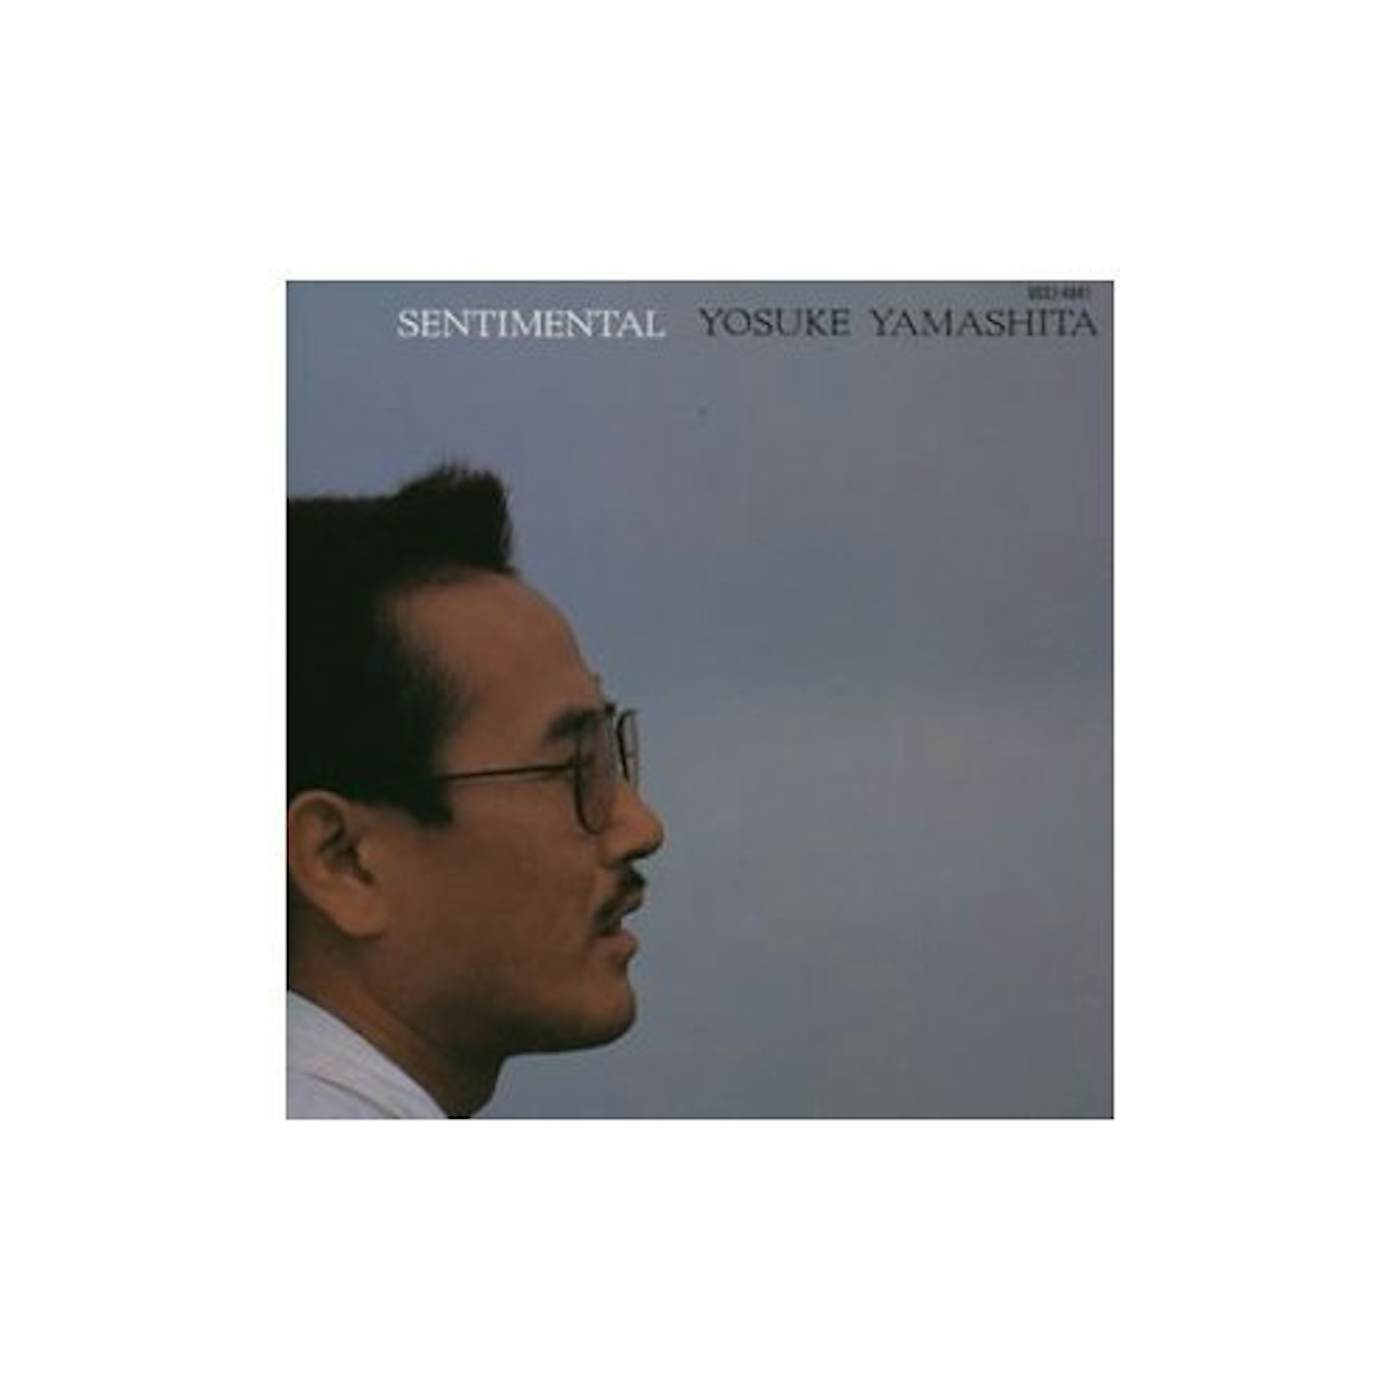 Yosuke Yamashita SENTIMENTAL CD